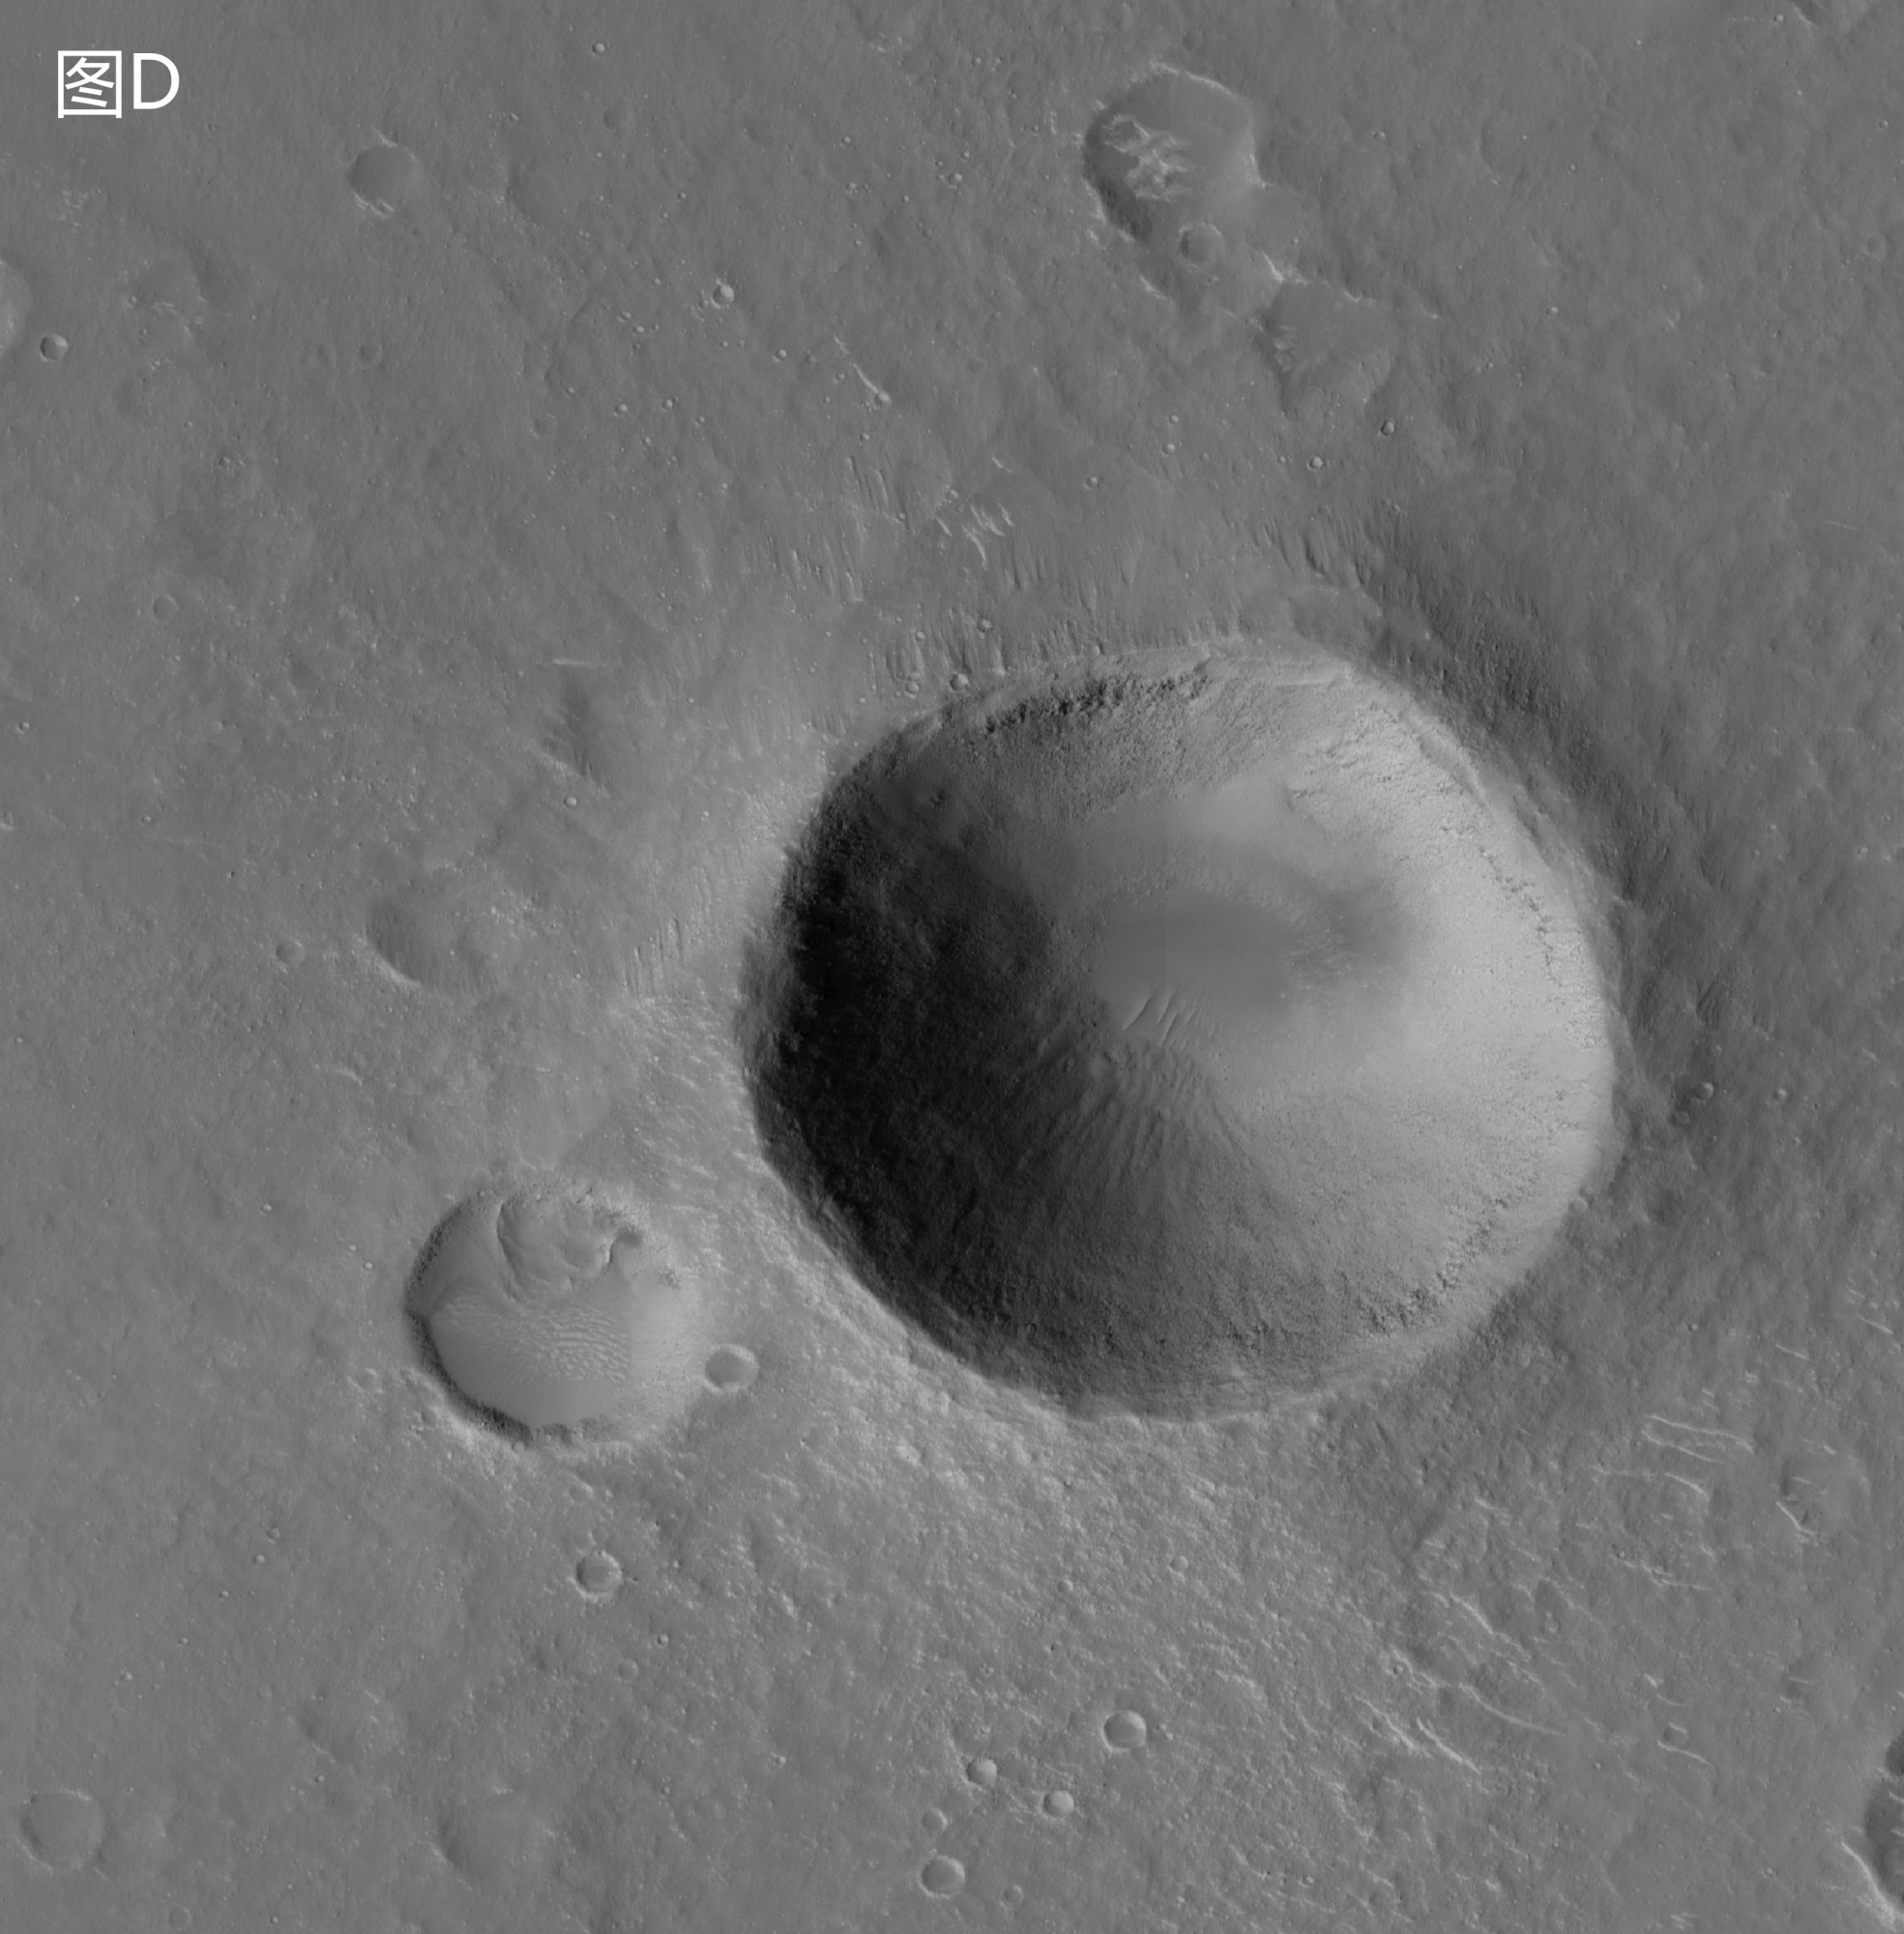 14_Tianwen-1-orbiter_HiRIC_Utopia-Planitia_landing-site-S_crater.thumb.jpg.fe3f8ac81cfbac6518952a0febe6c1fc.jpg